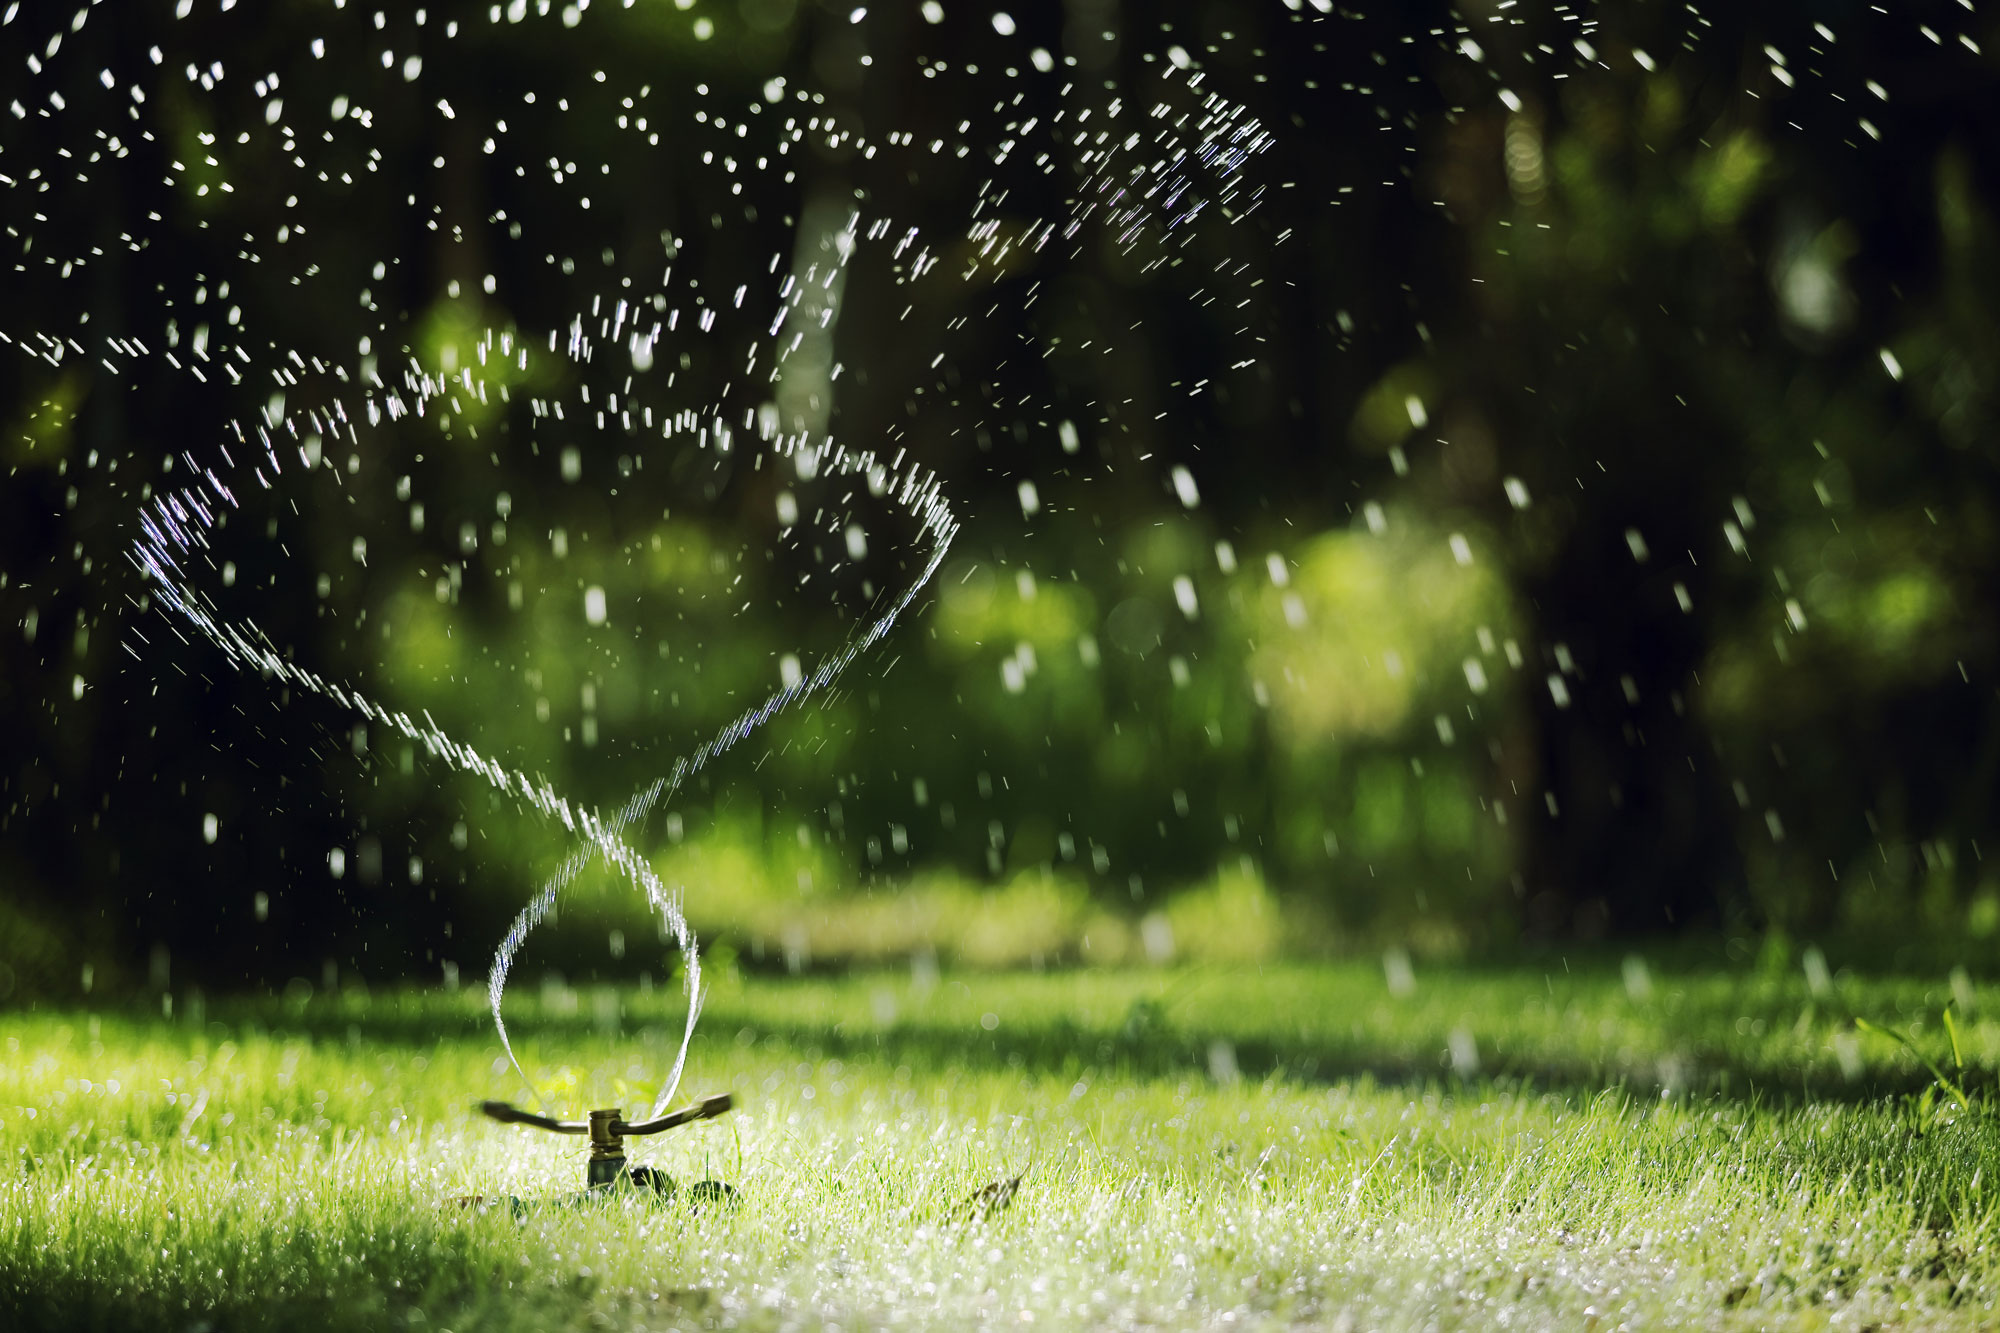 photo - Sprinkler Watering the Grass